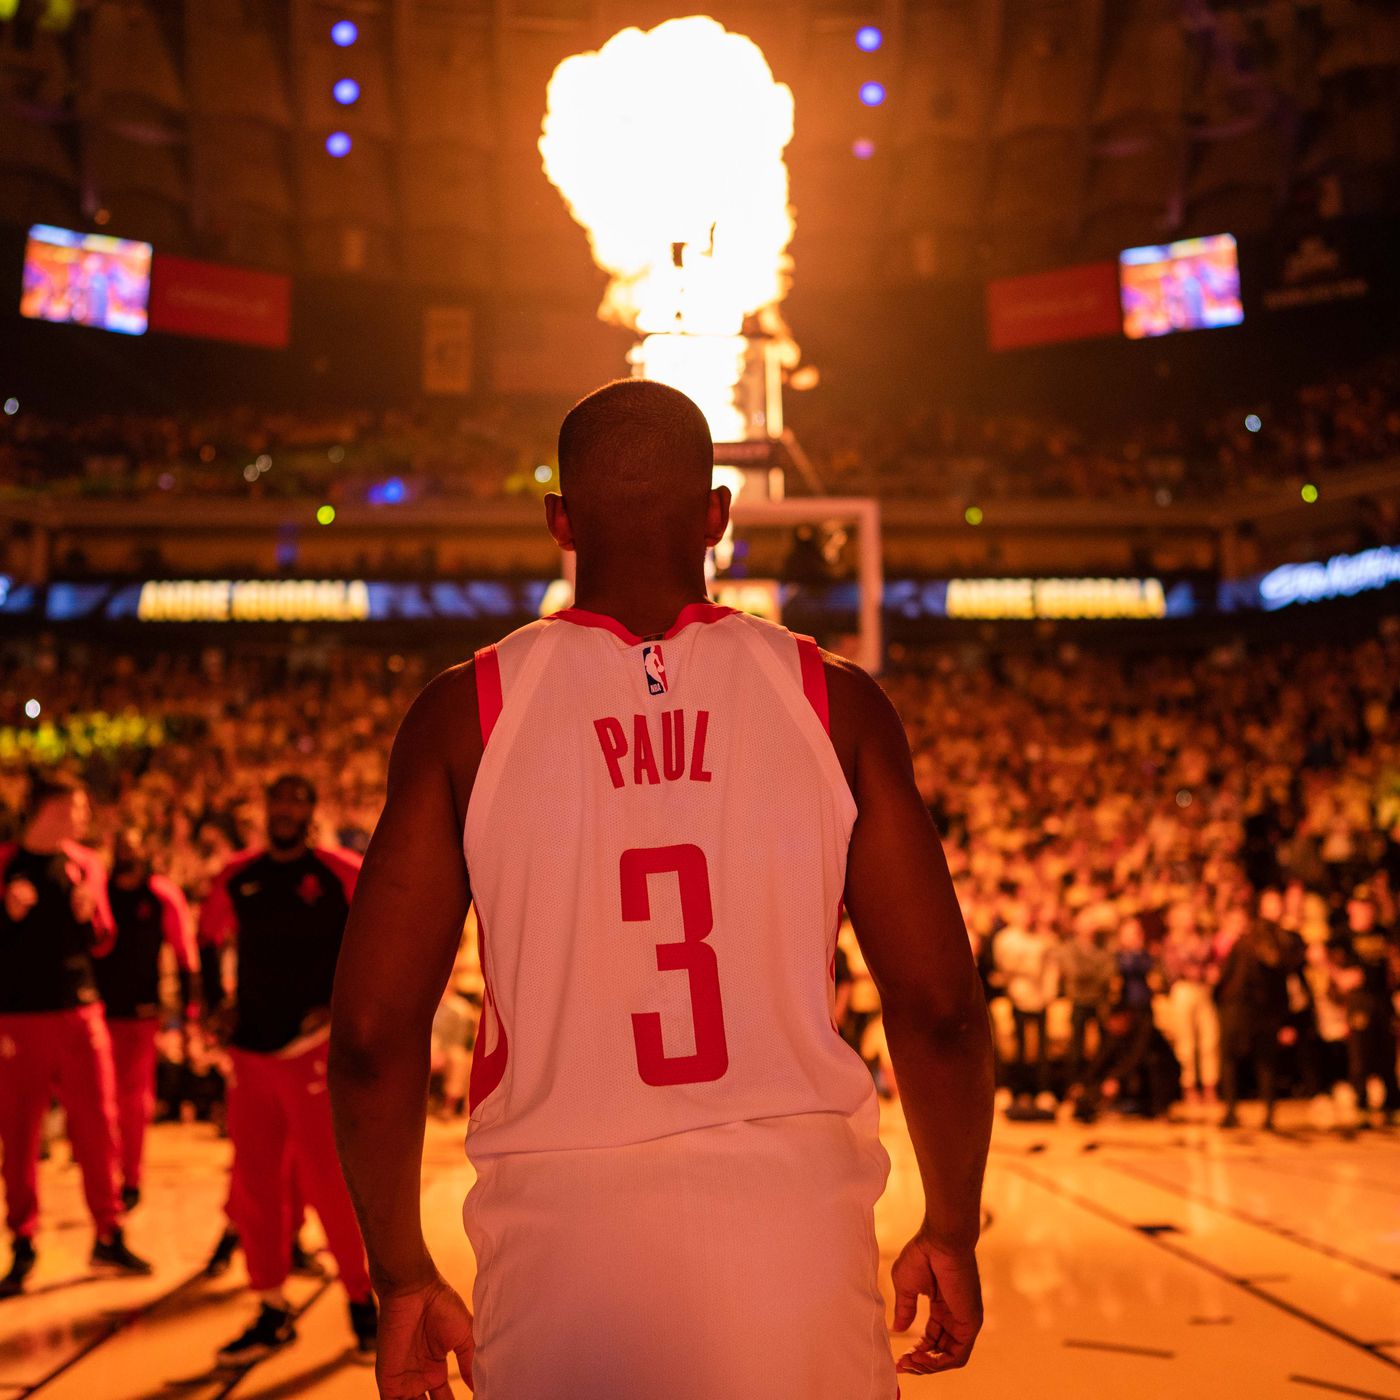 Houston Rockets 2018-19 player recaps: Chris Paul - The Dream Shake